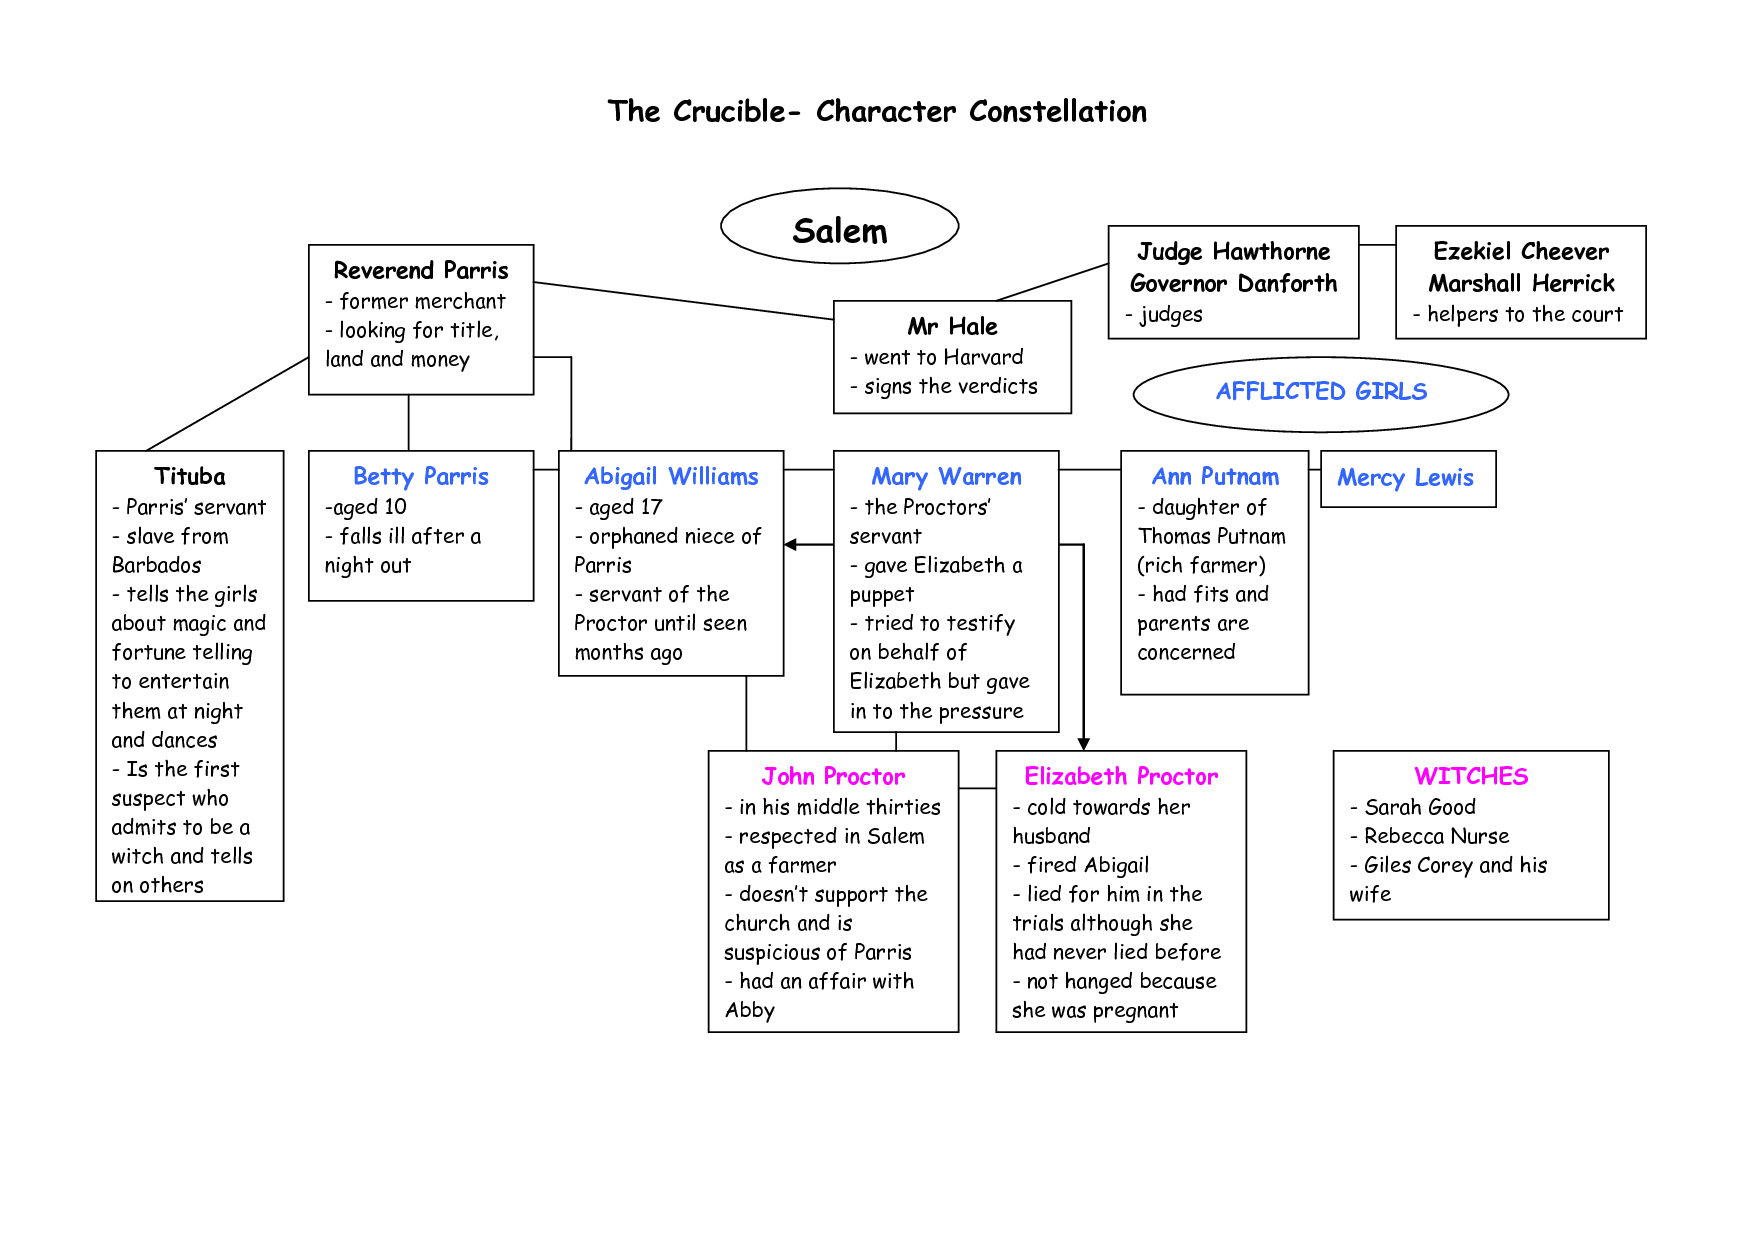 Characterization of the crucible